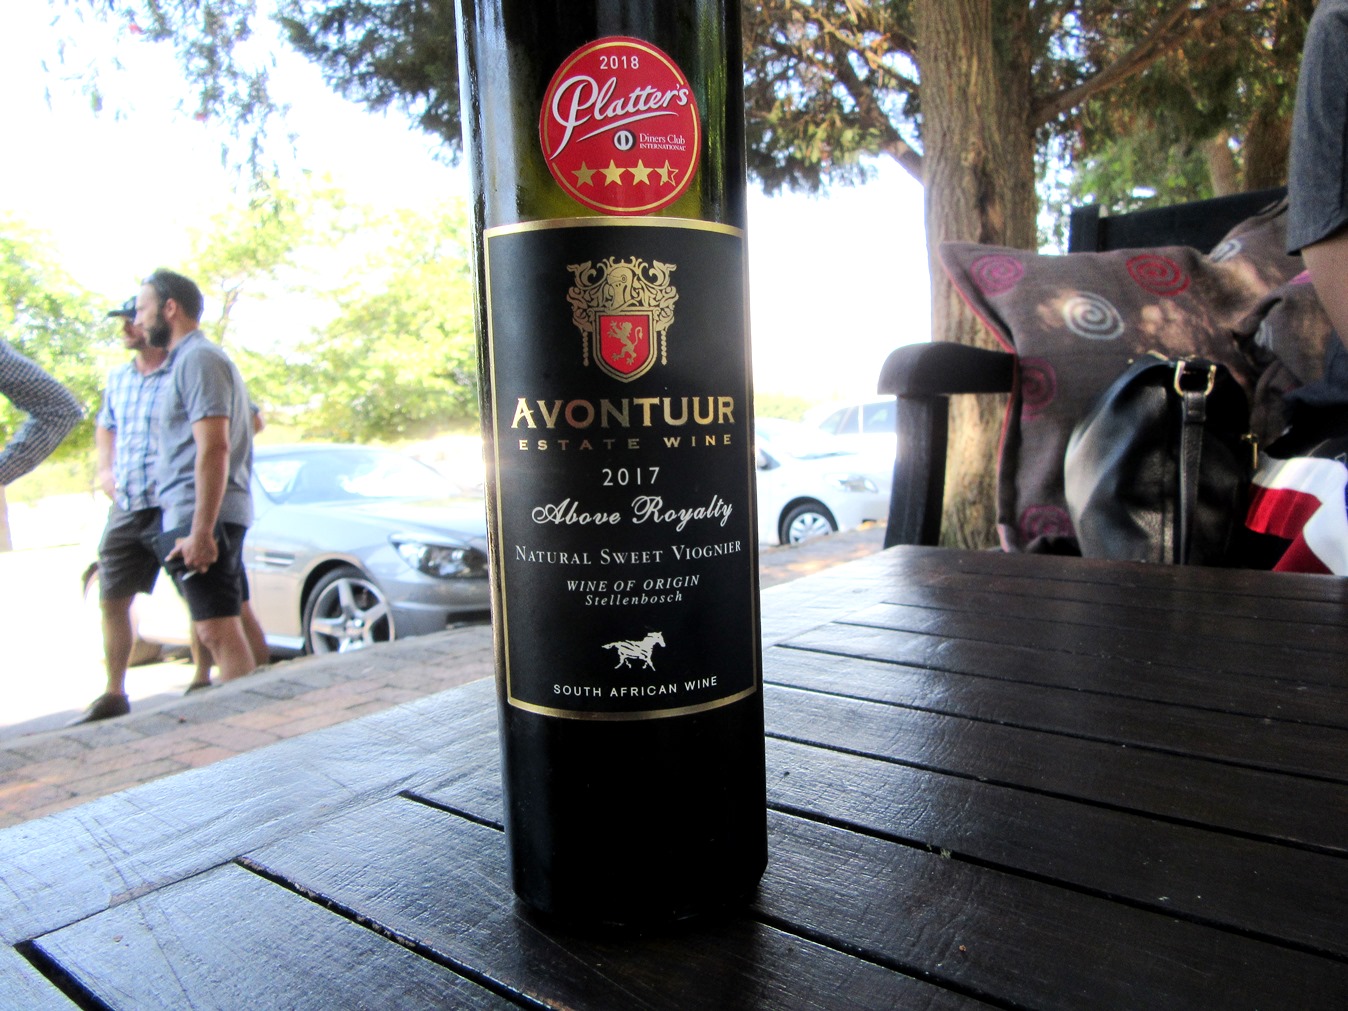 Avontuur Estate Wine, Above Royalty Naturally Sweet Viognier 2017, Stellenbosch, South Africa